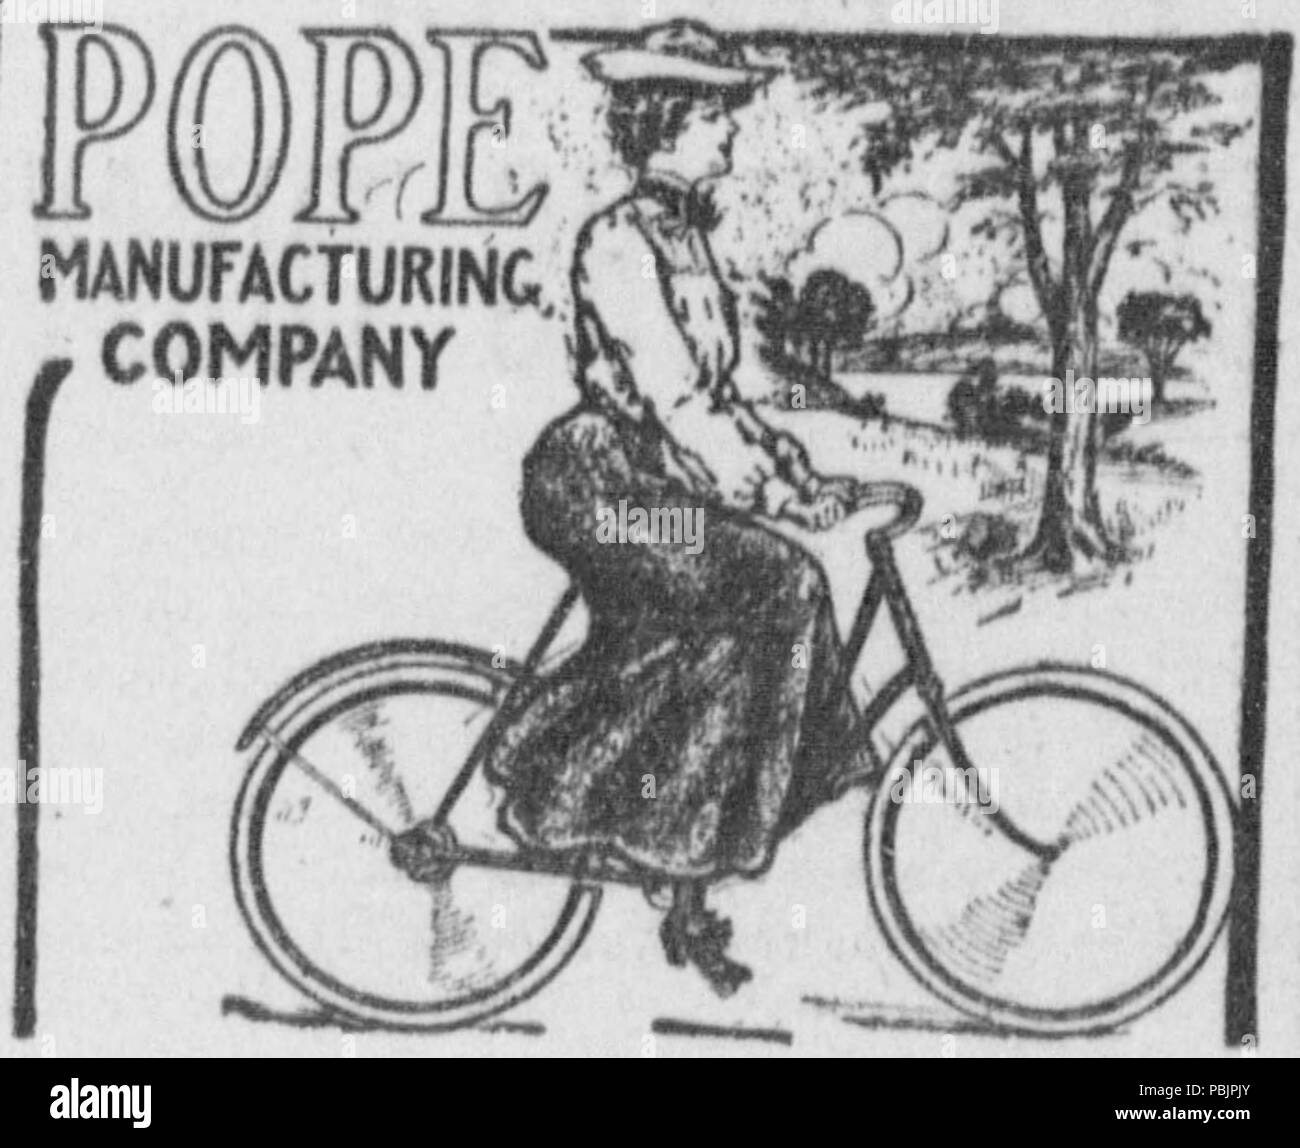 1867 Women's bicycle advertisement (1904) Stock Photo